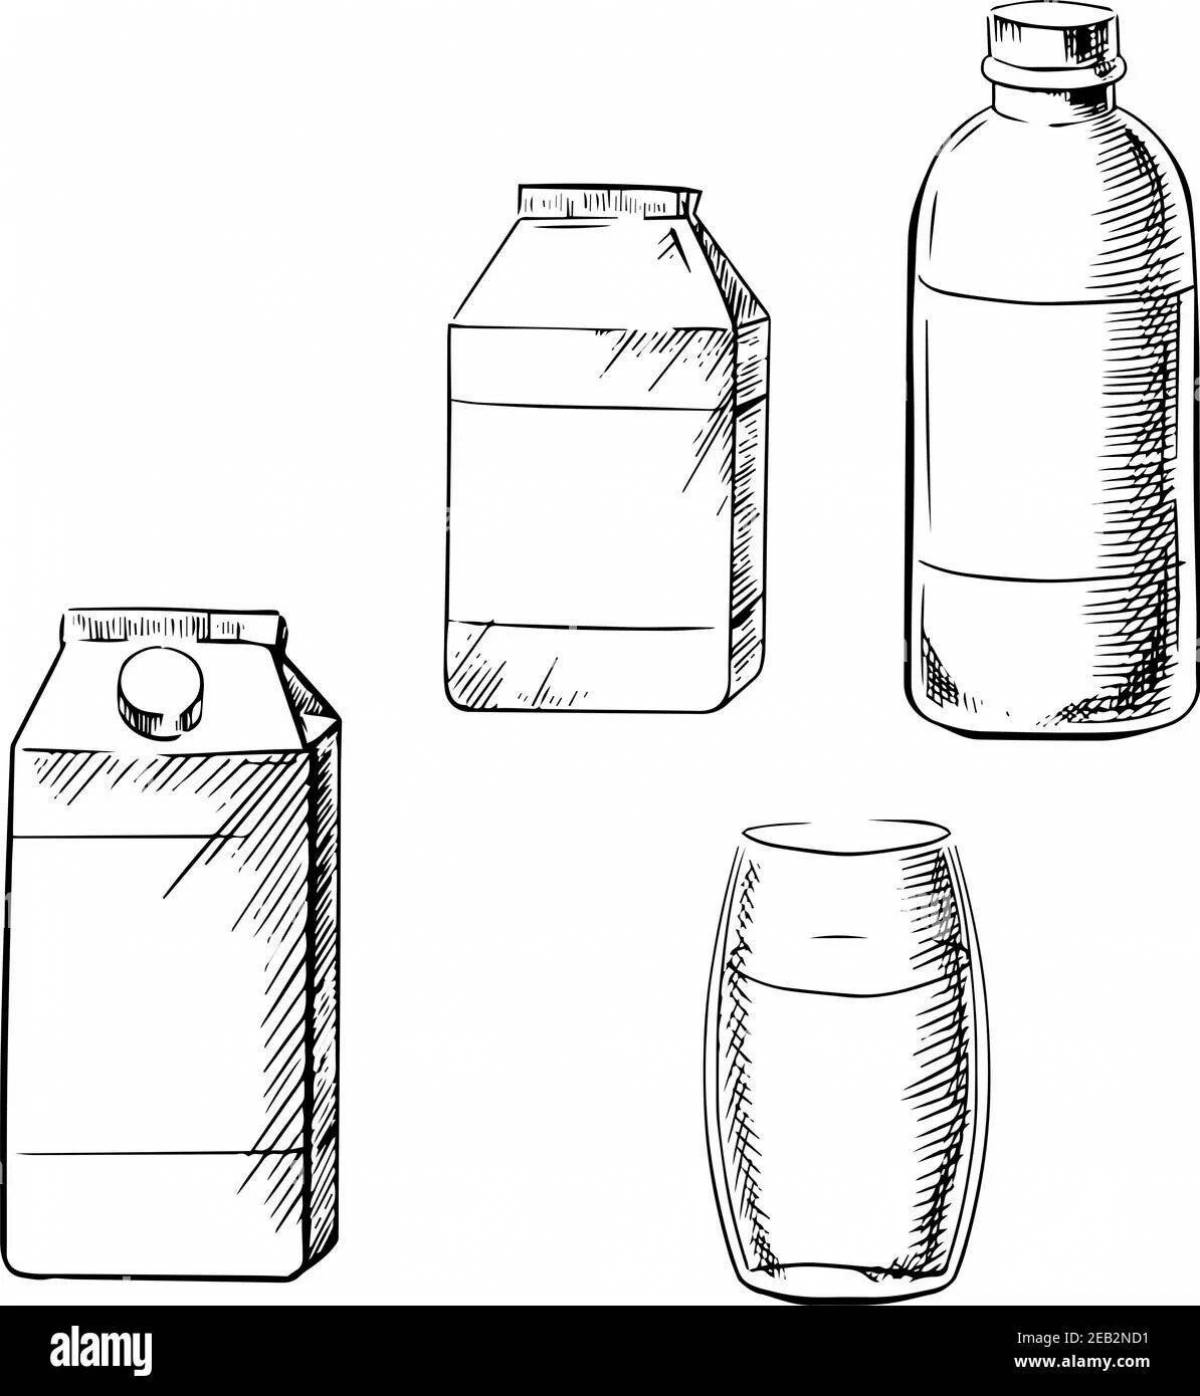 Adorable milk bottle coloring page